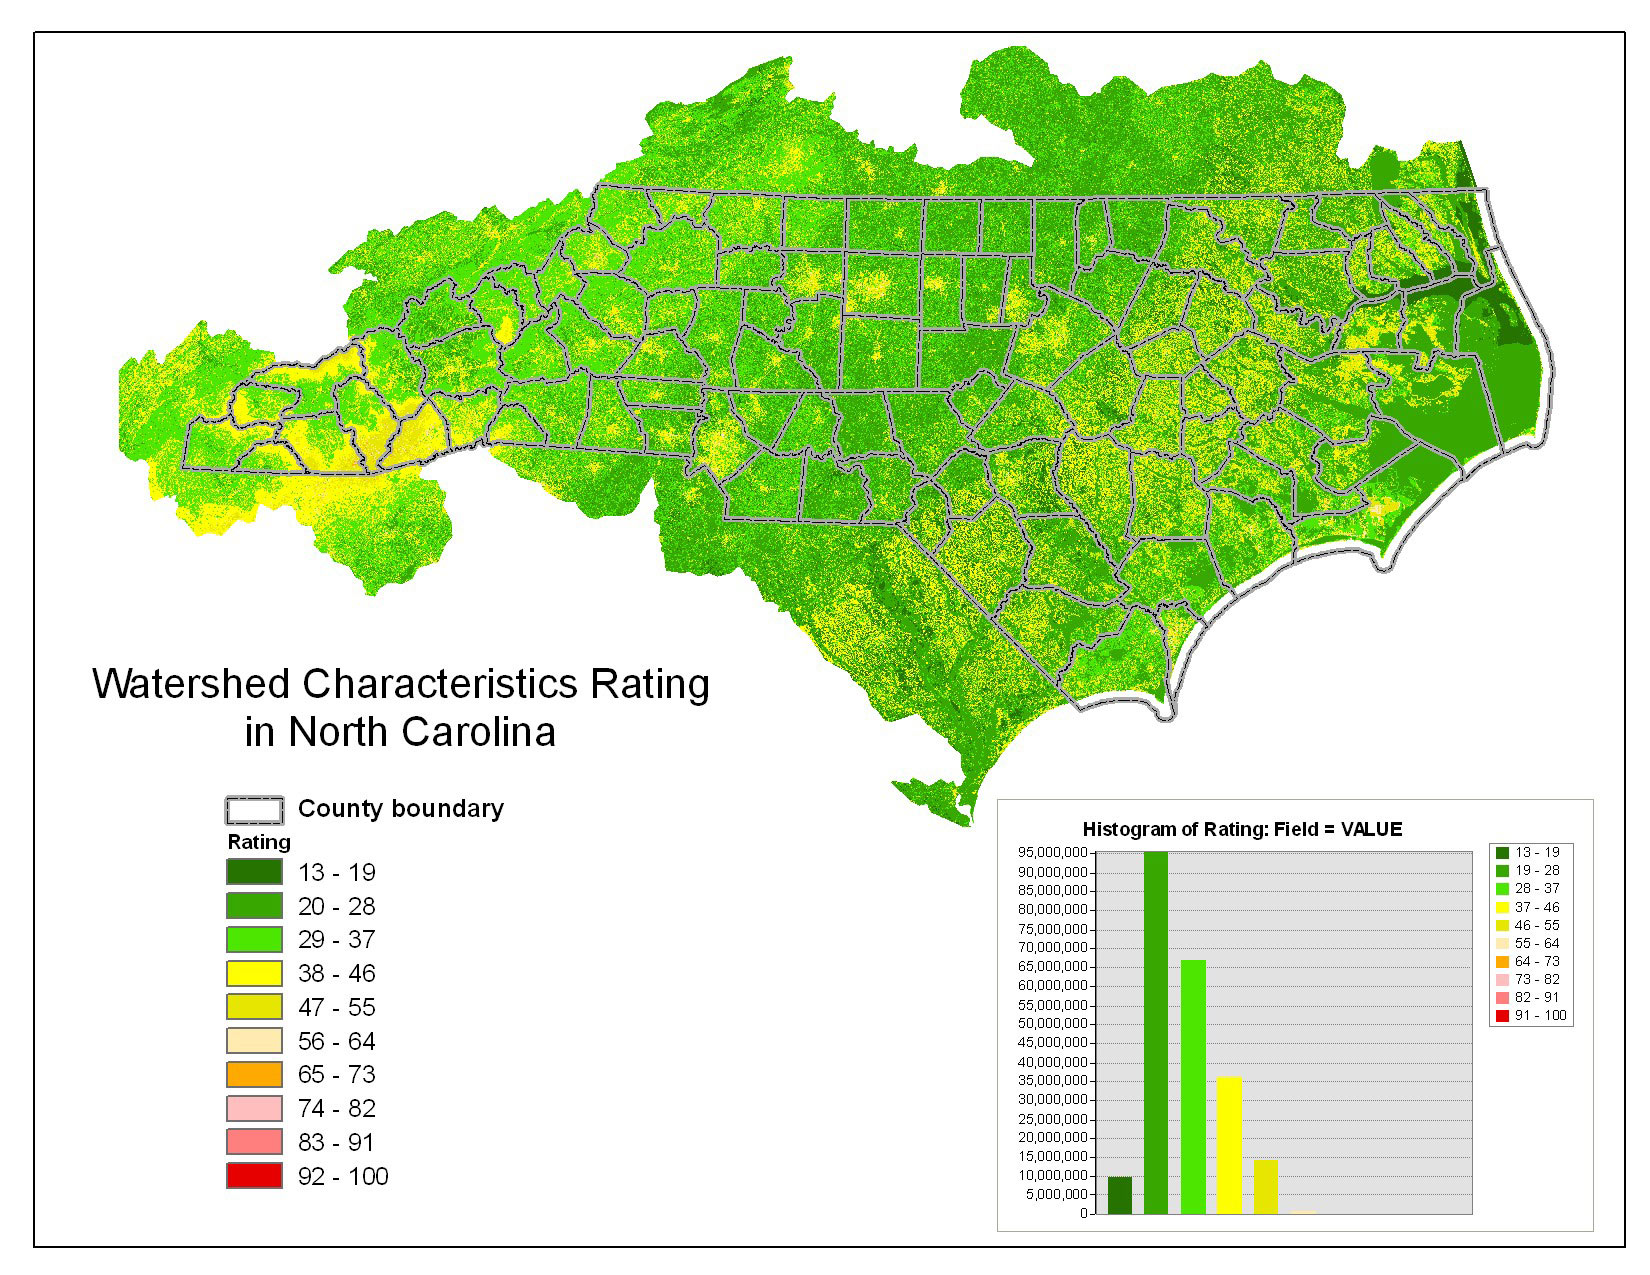 The watershed characteristics ratings for North Carolina